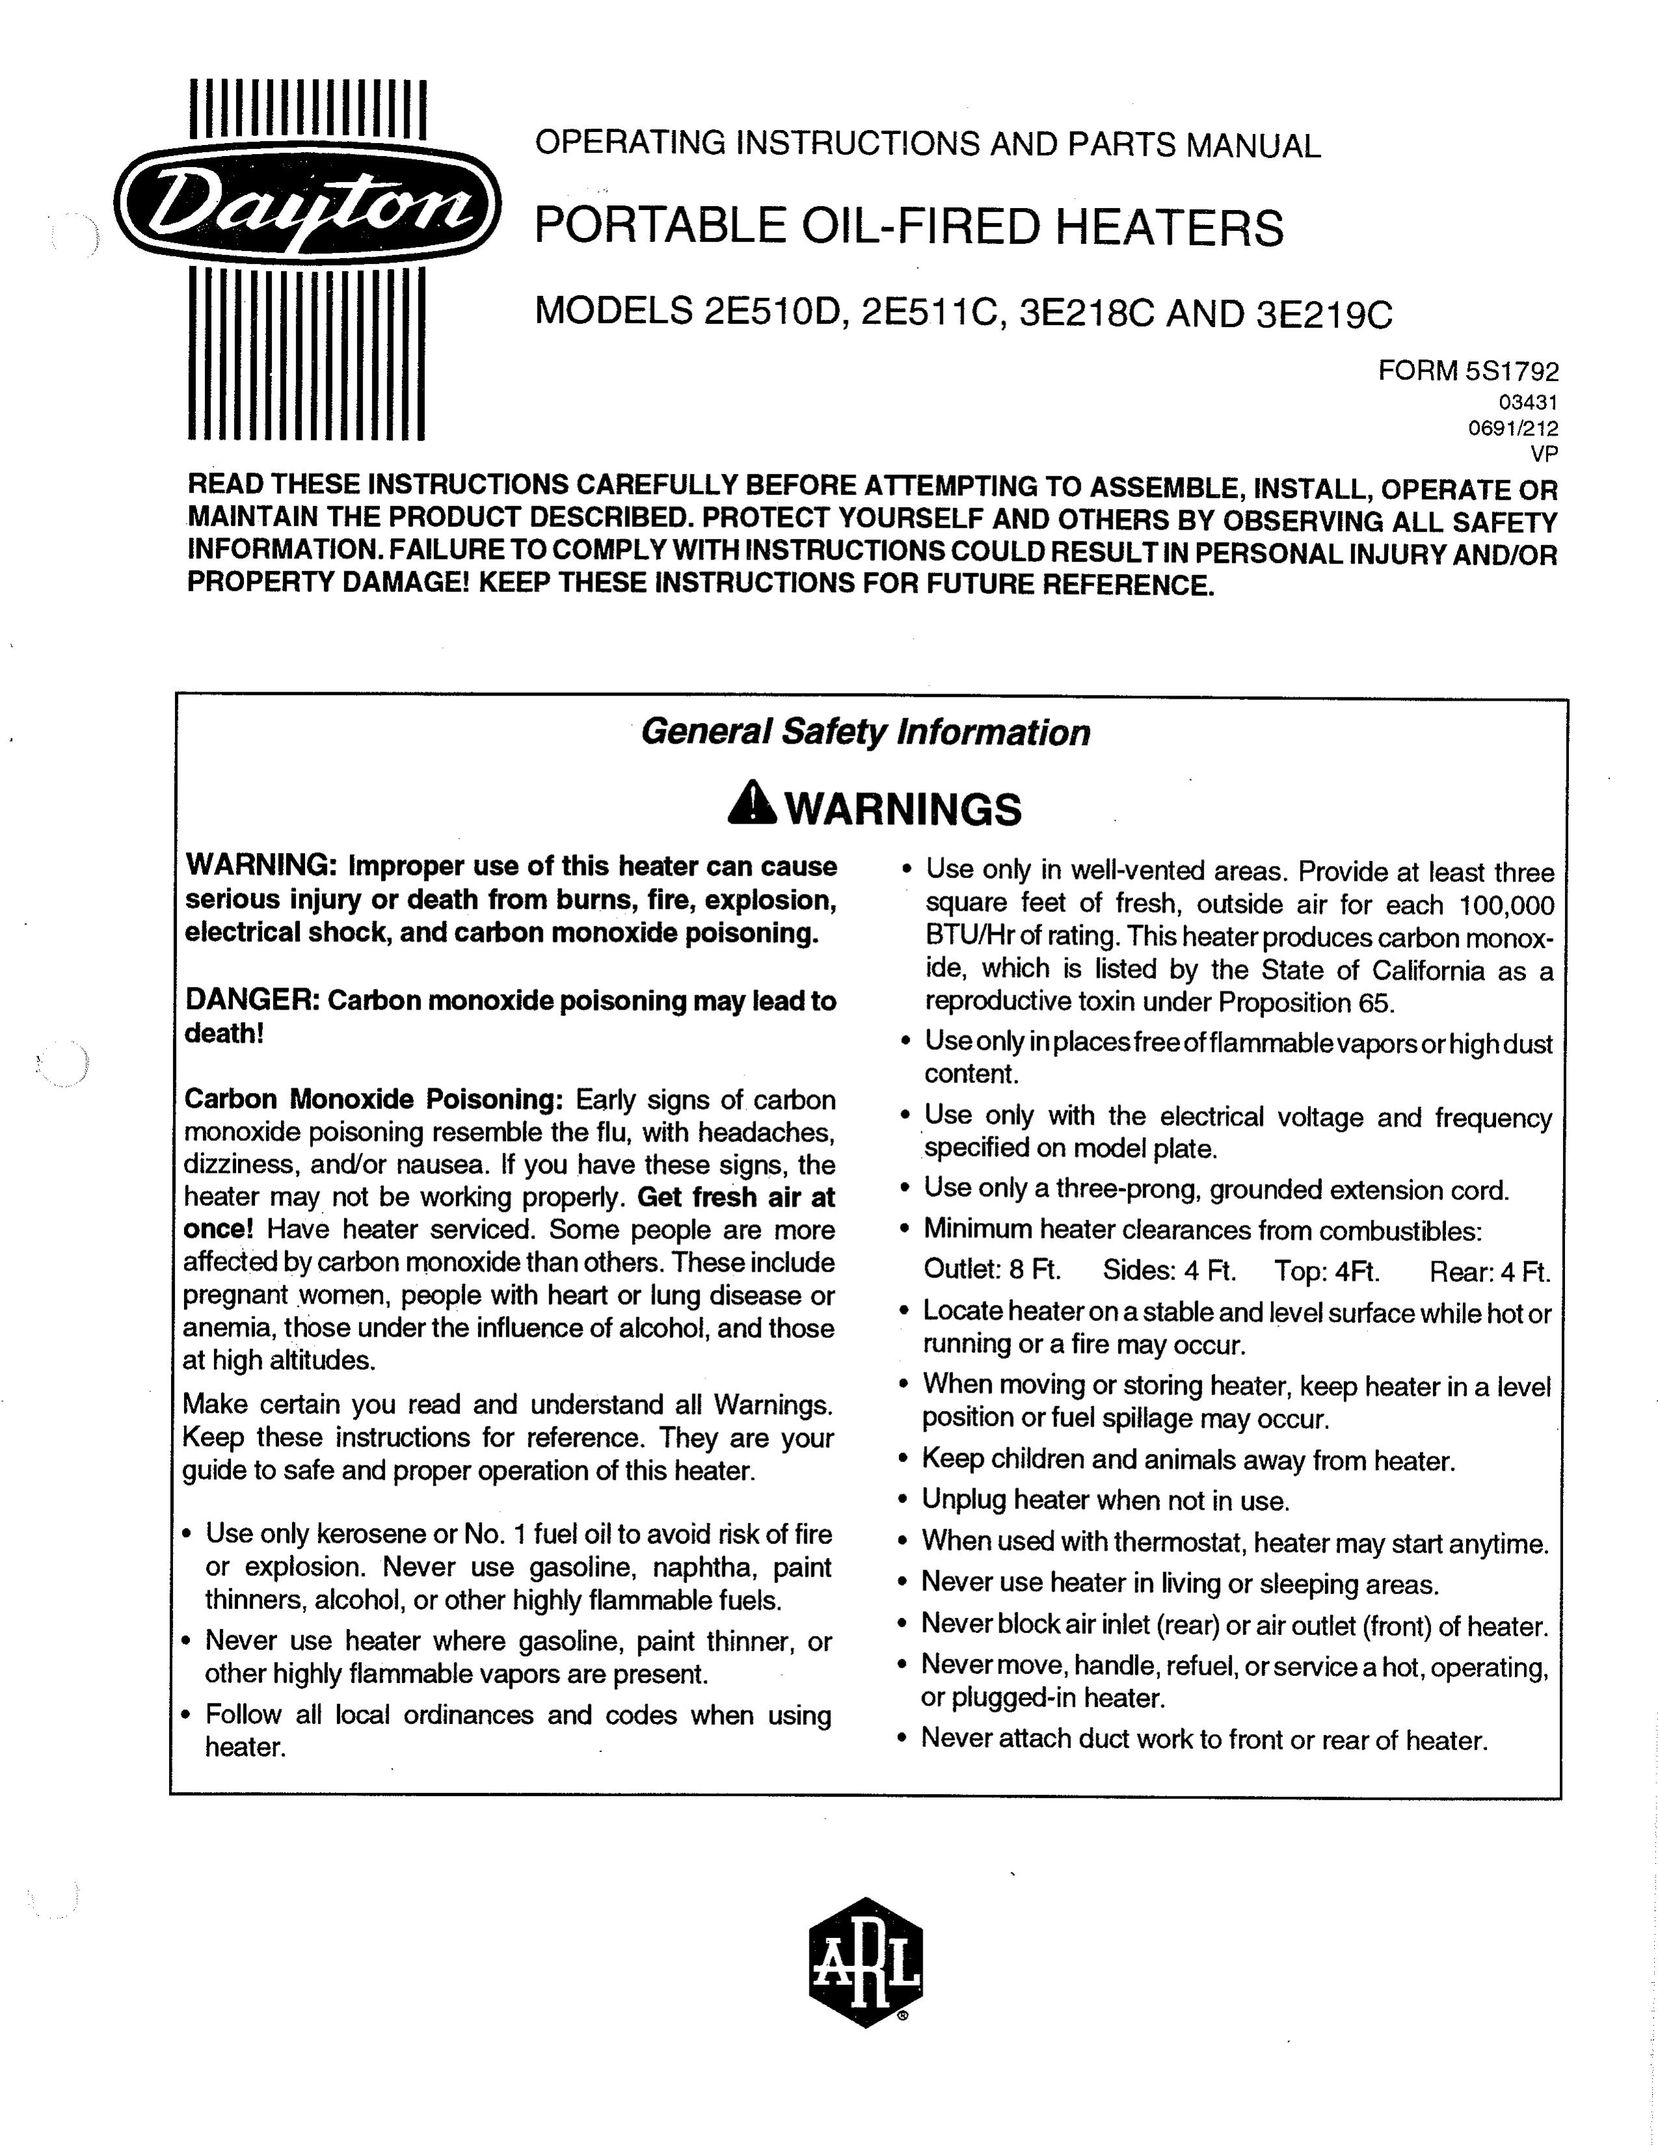 Dayton 2E511C Electric Heater User Manual